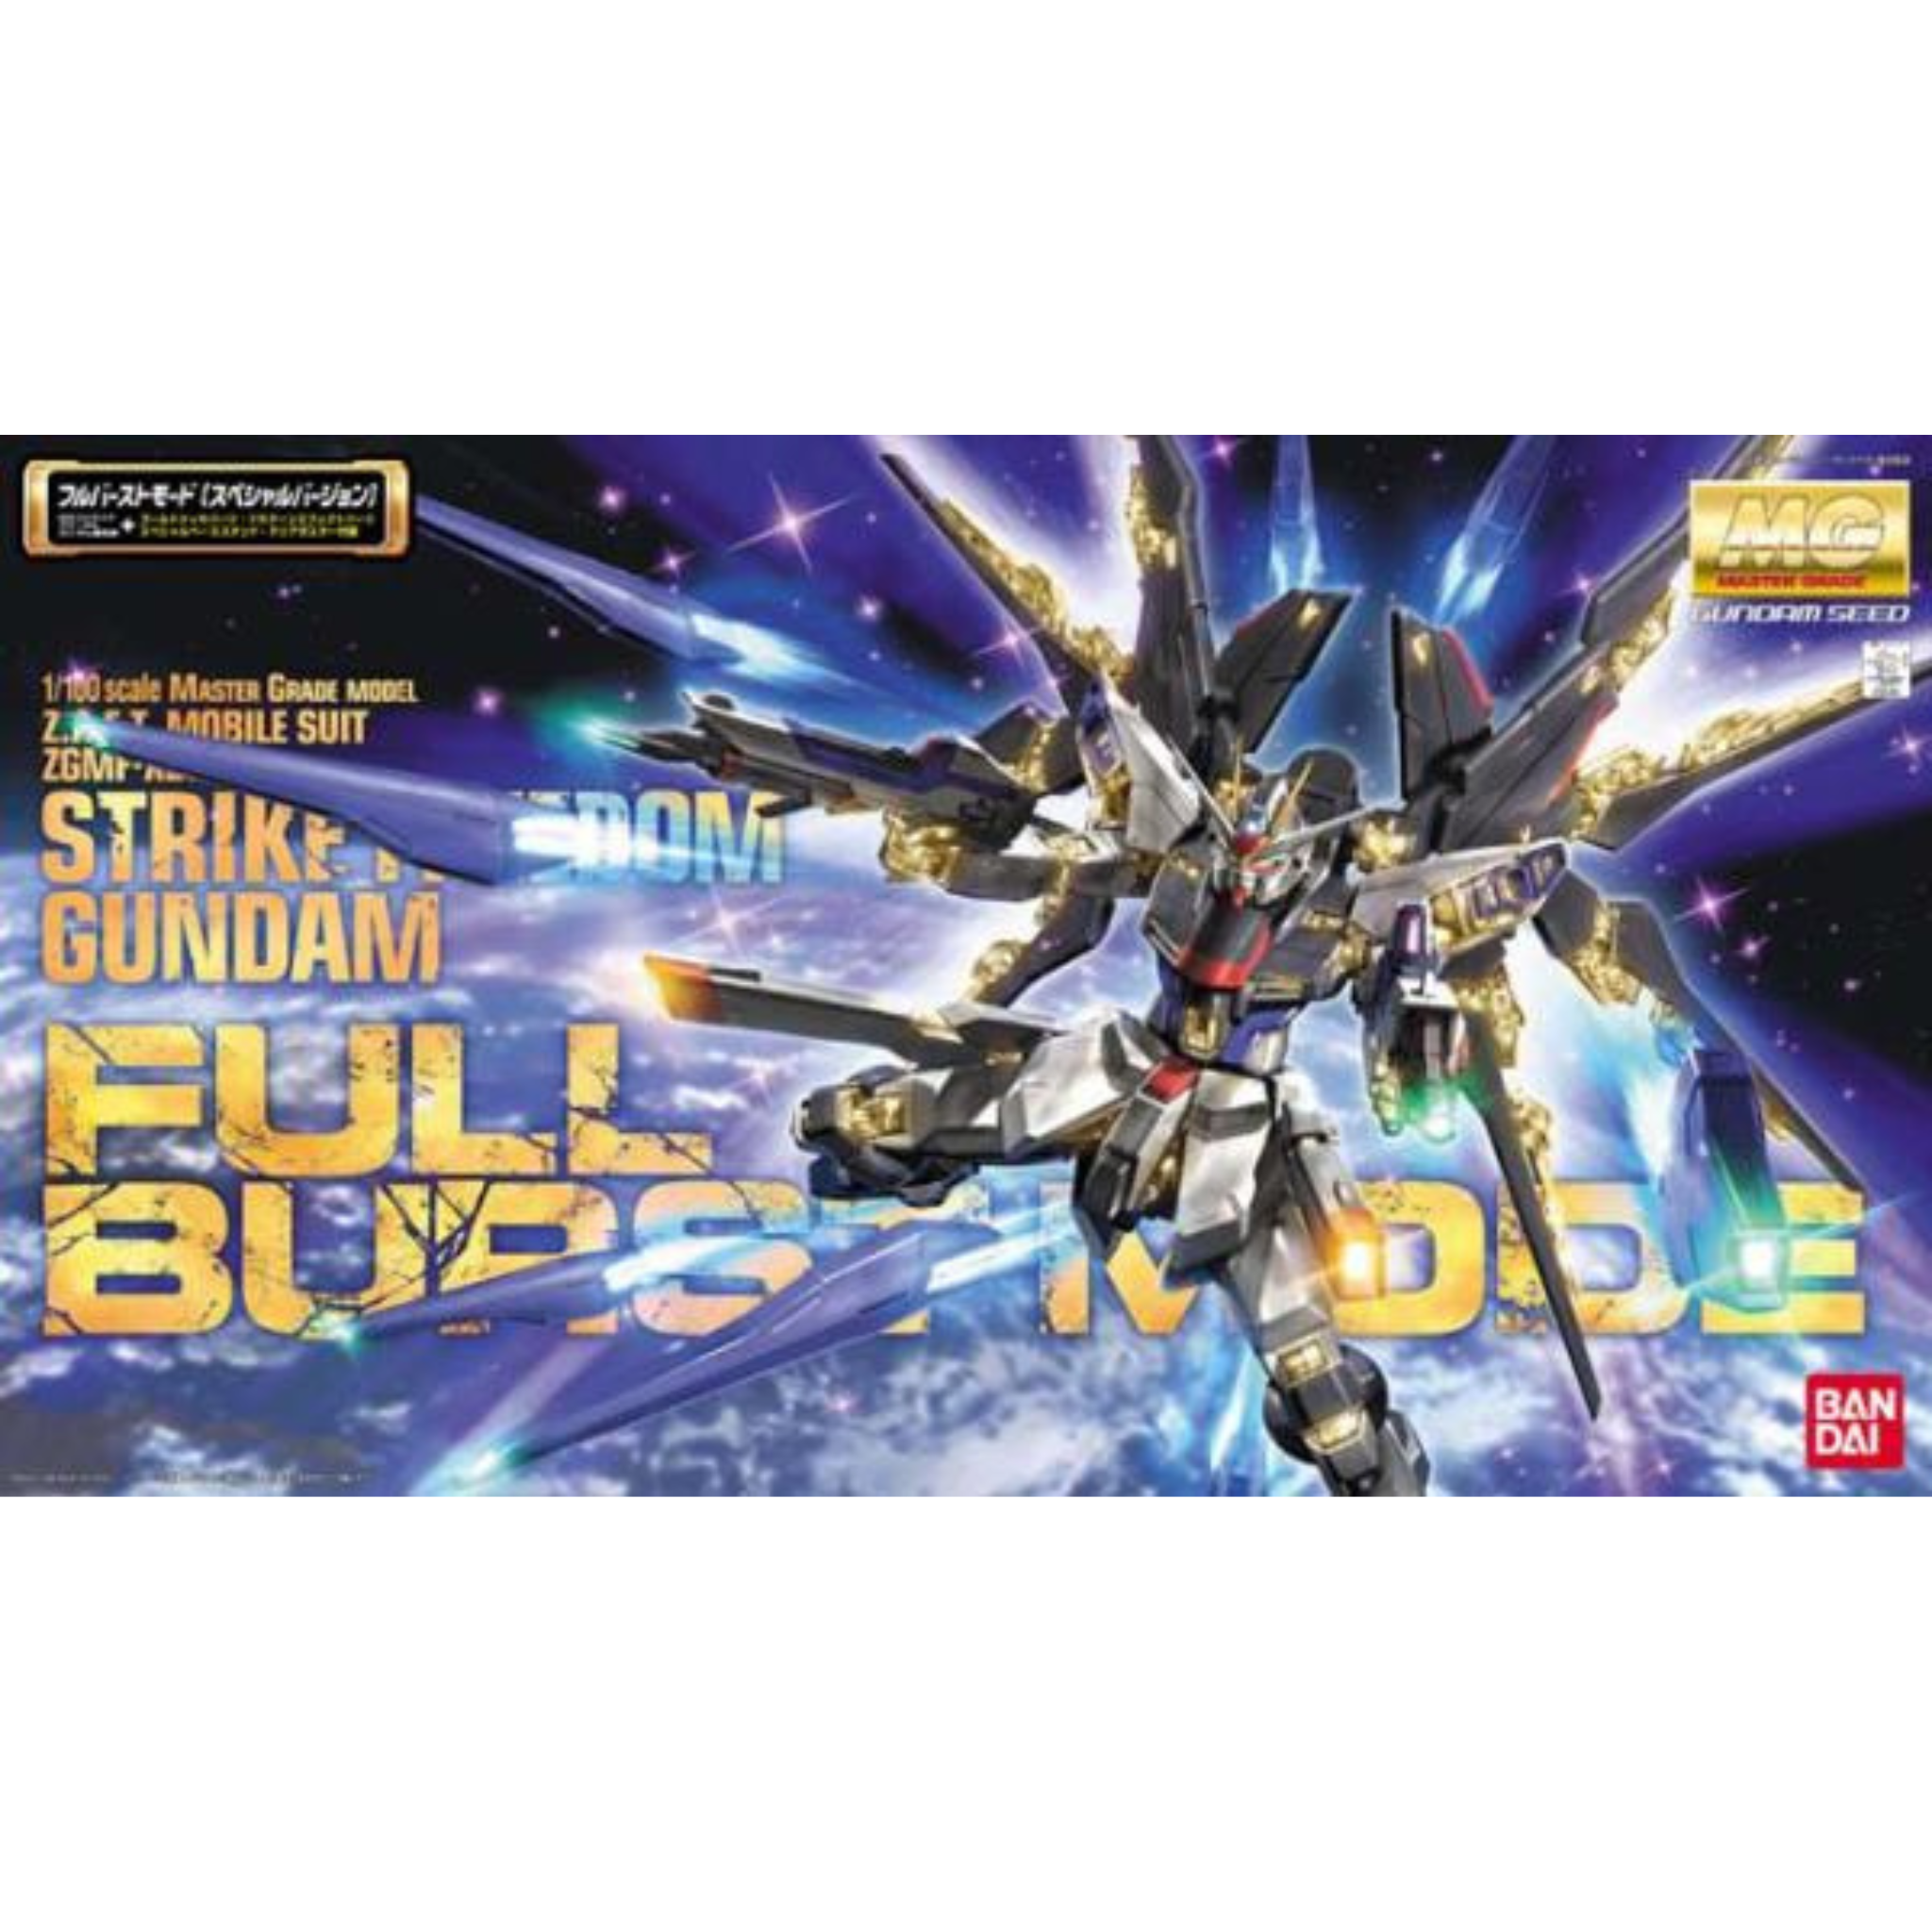 MG 1/100 ZGMF-X20A Strike Freedom Gundam Full Burst Special Version #100741 by Bandai